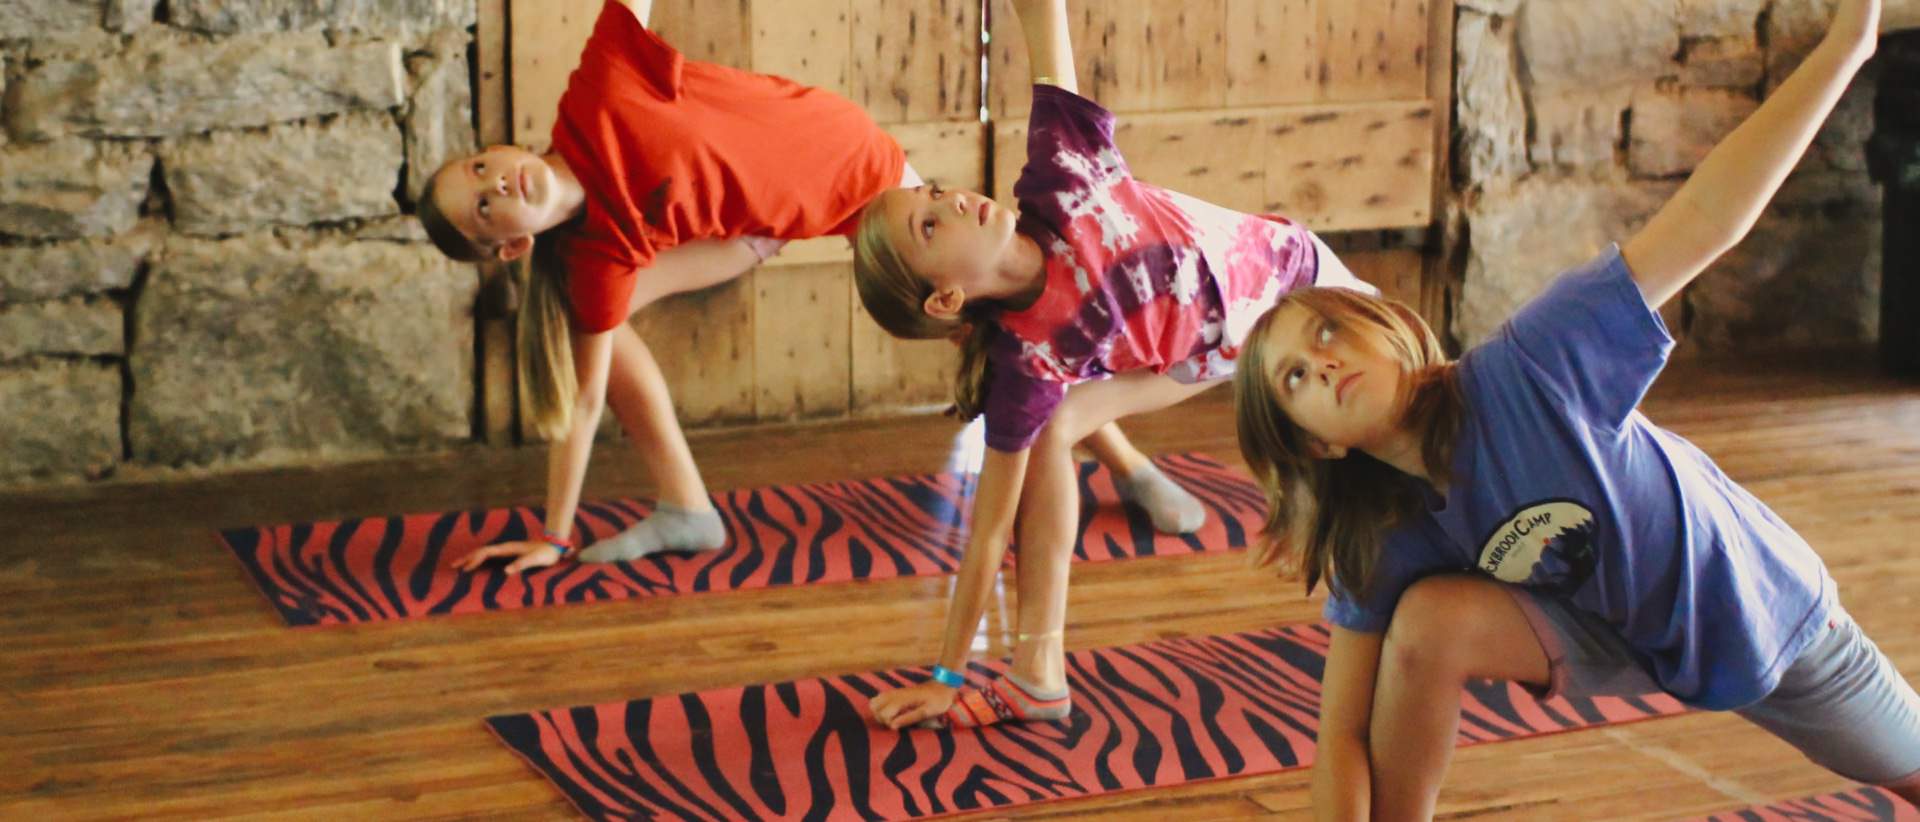 Kids Yoga | Fun with Partner Poses 👯| Child's Pose Yoga - YouTube